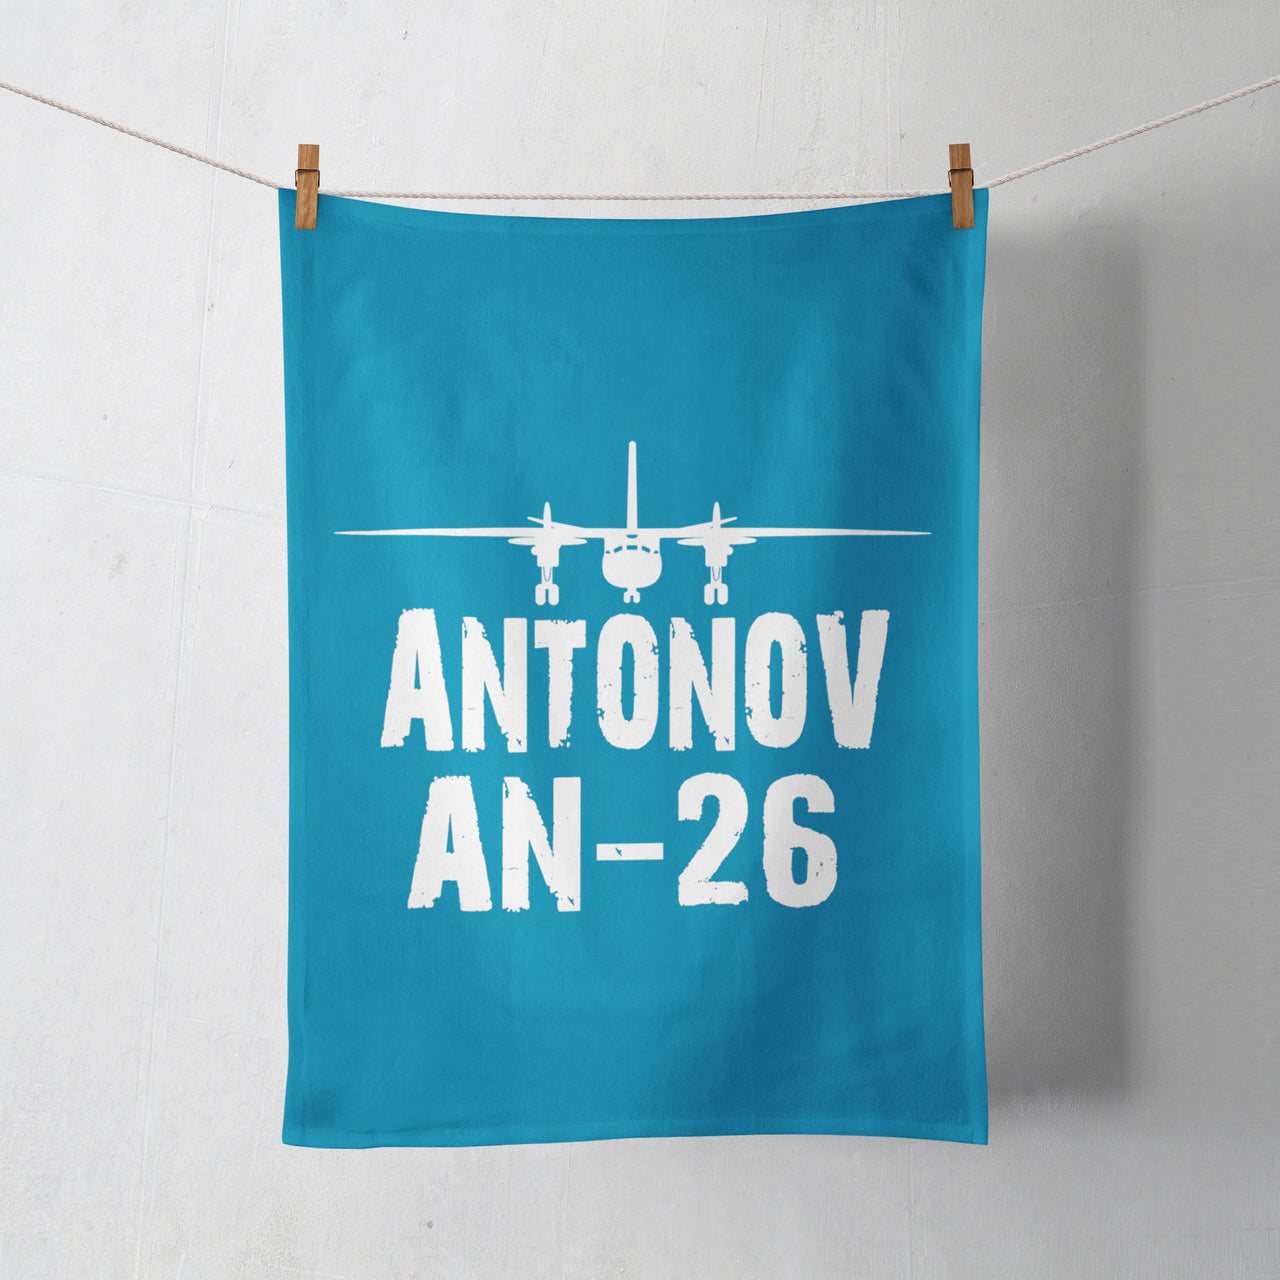 Antonov AN-26 & Plane Designed Towels